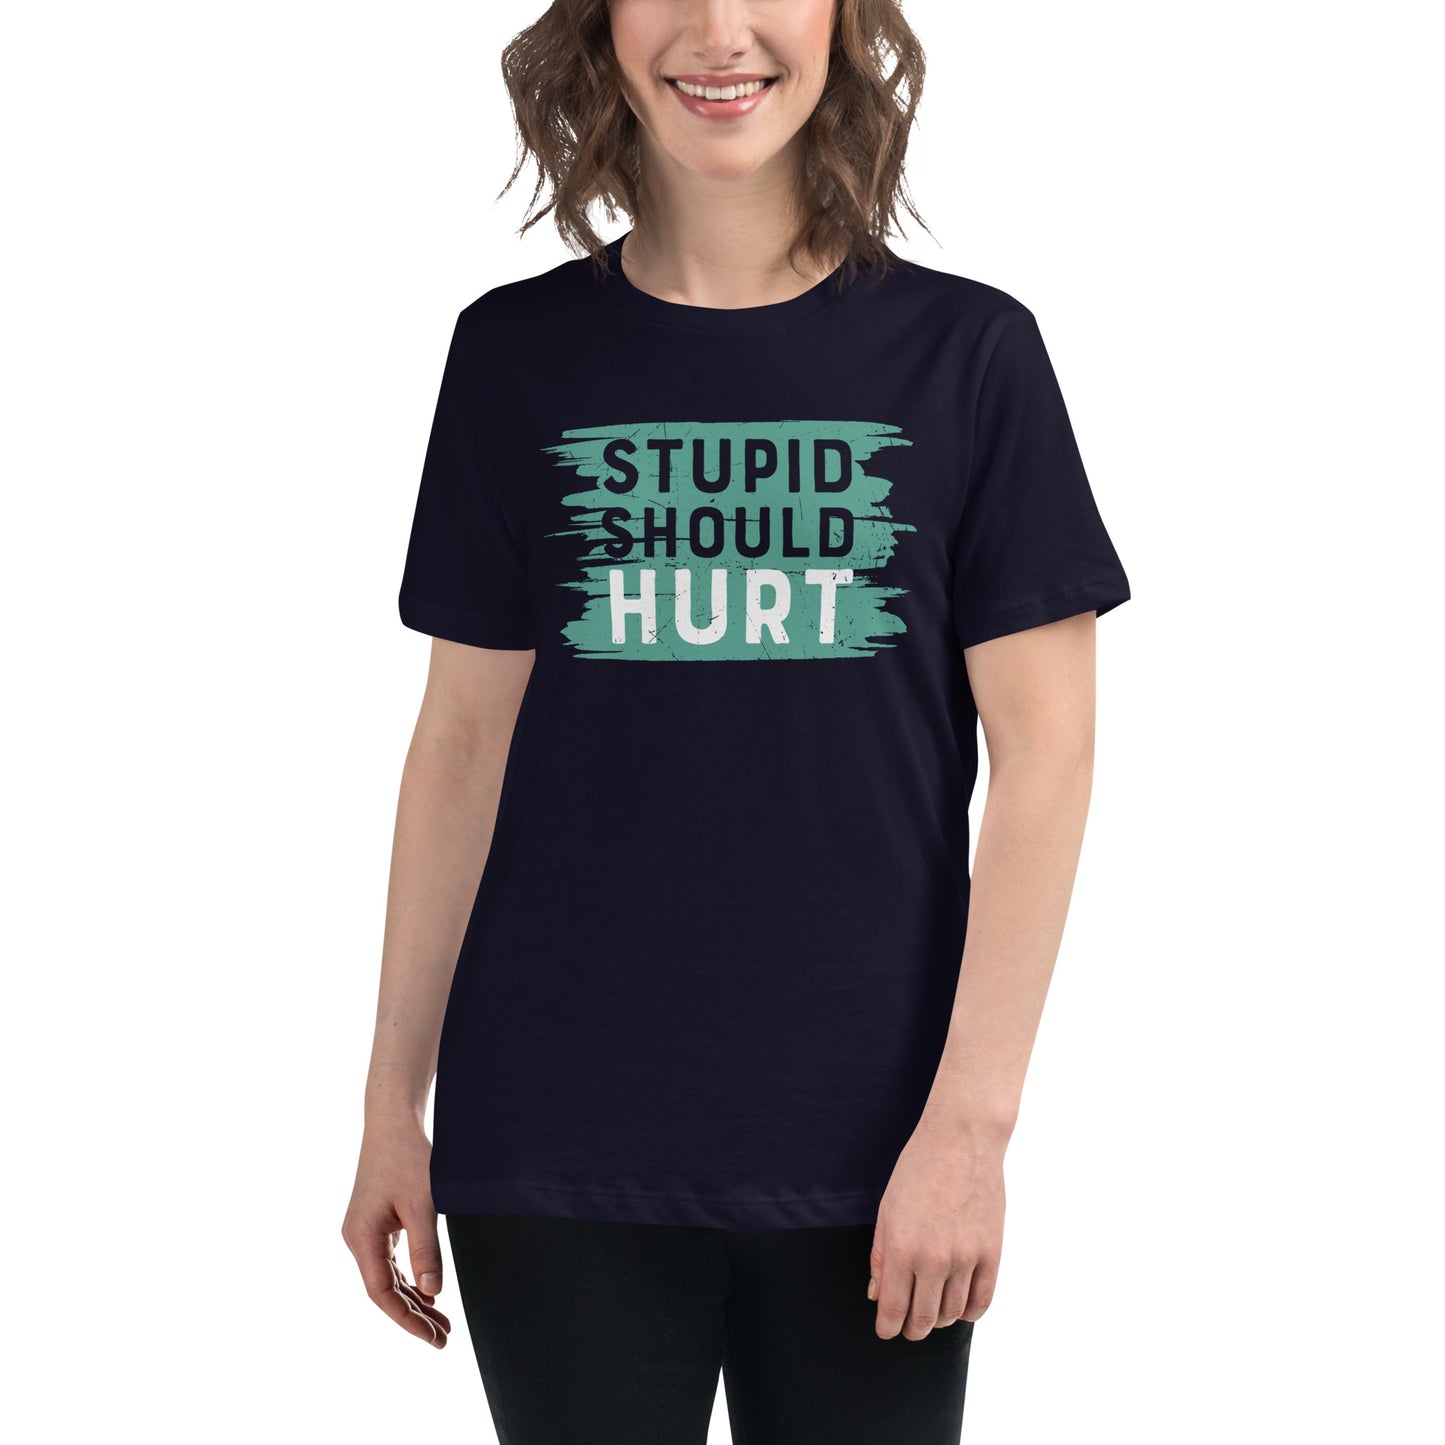 Should Stupid Hurt